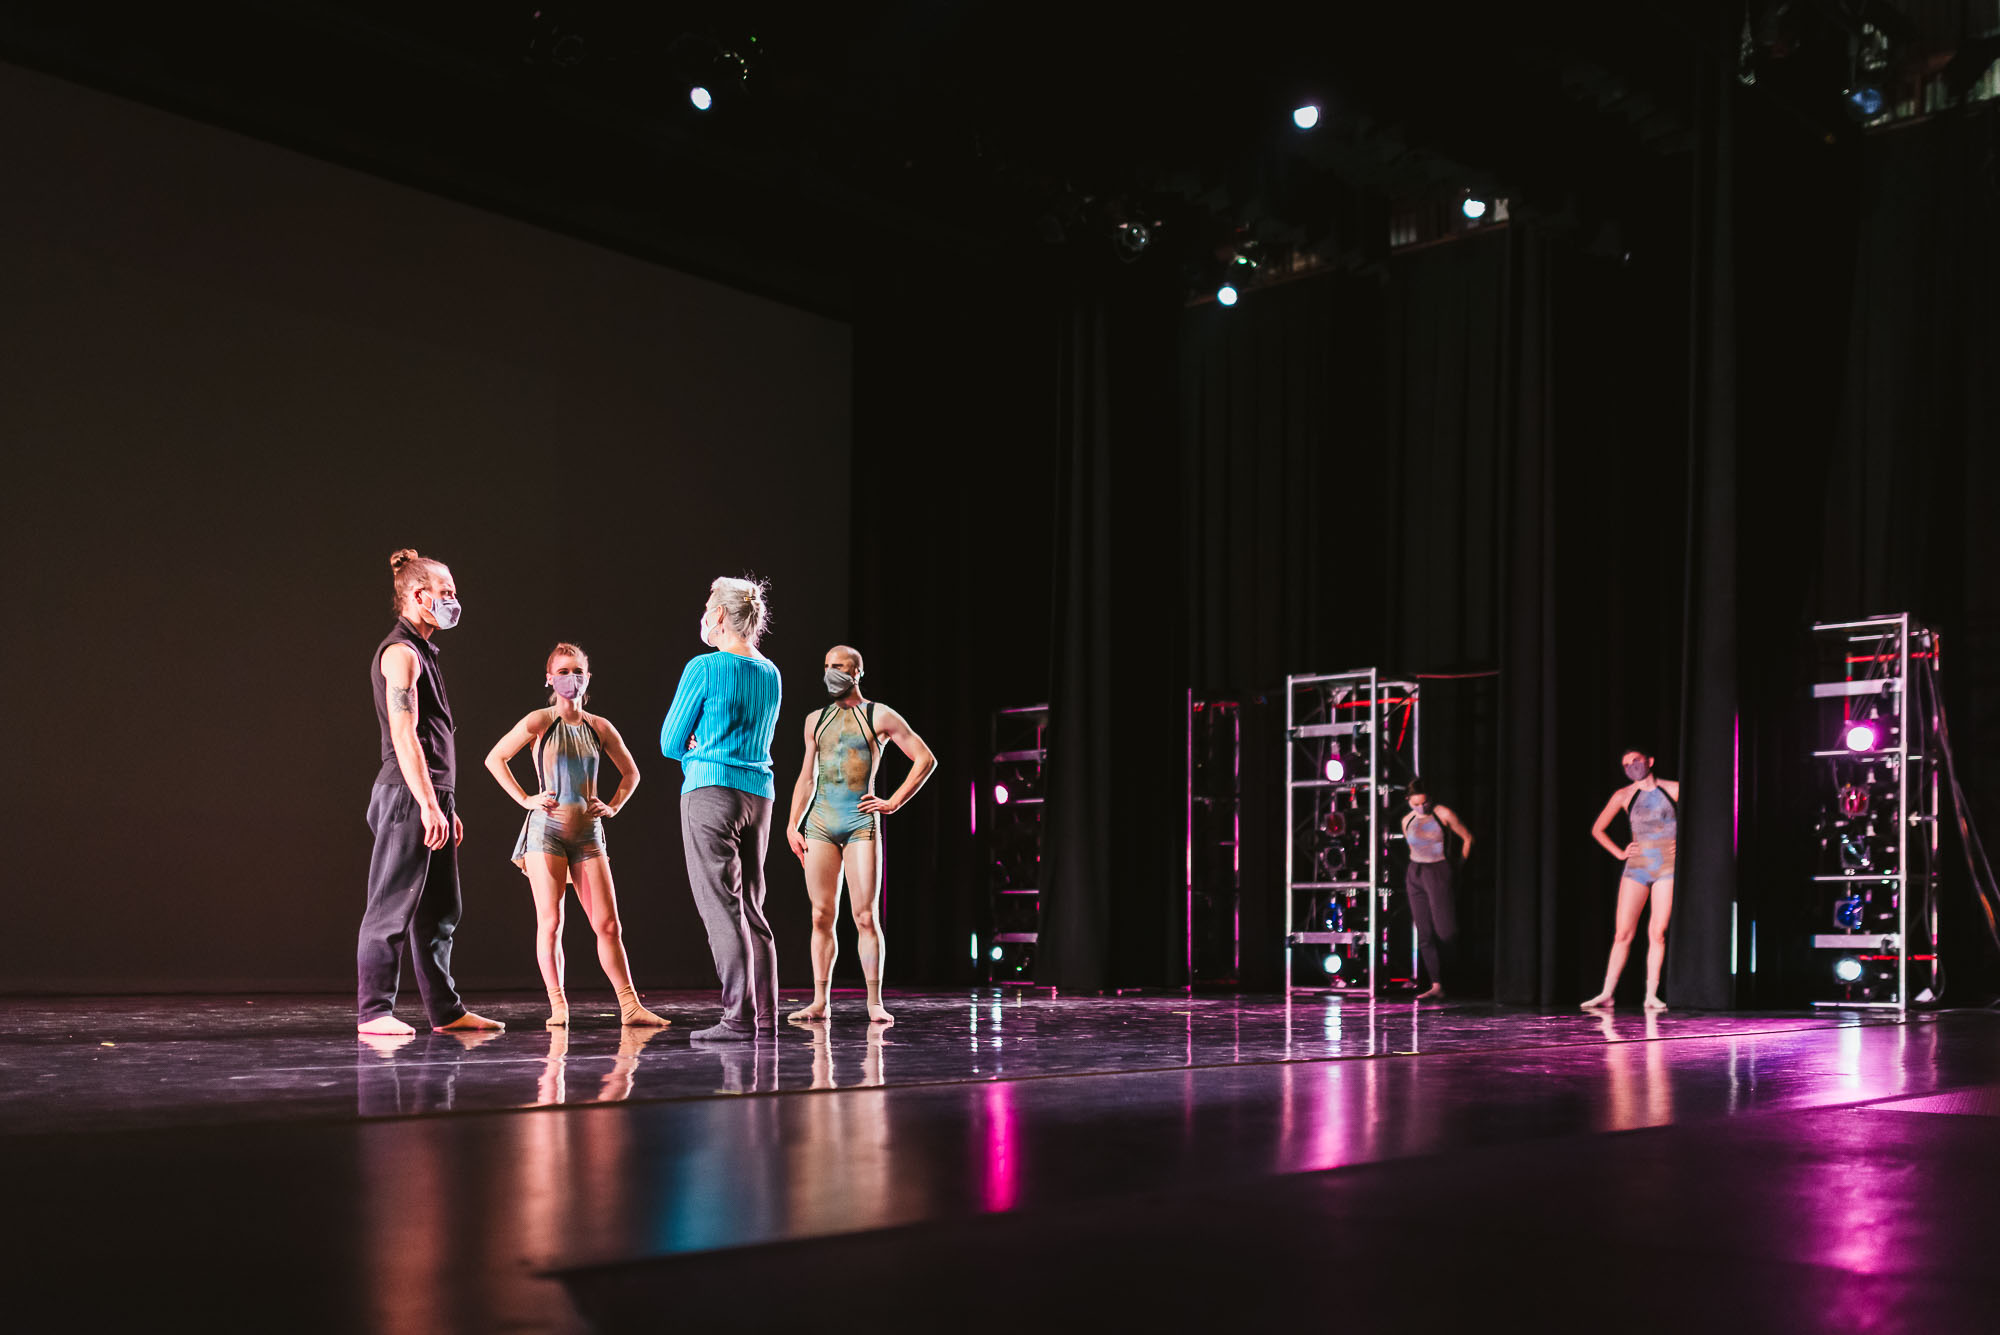 BUY TICKETS — Idaho Dance Theatre